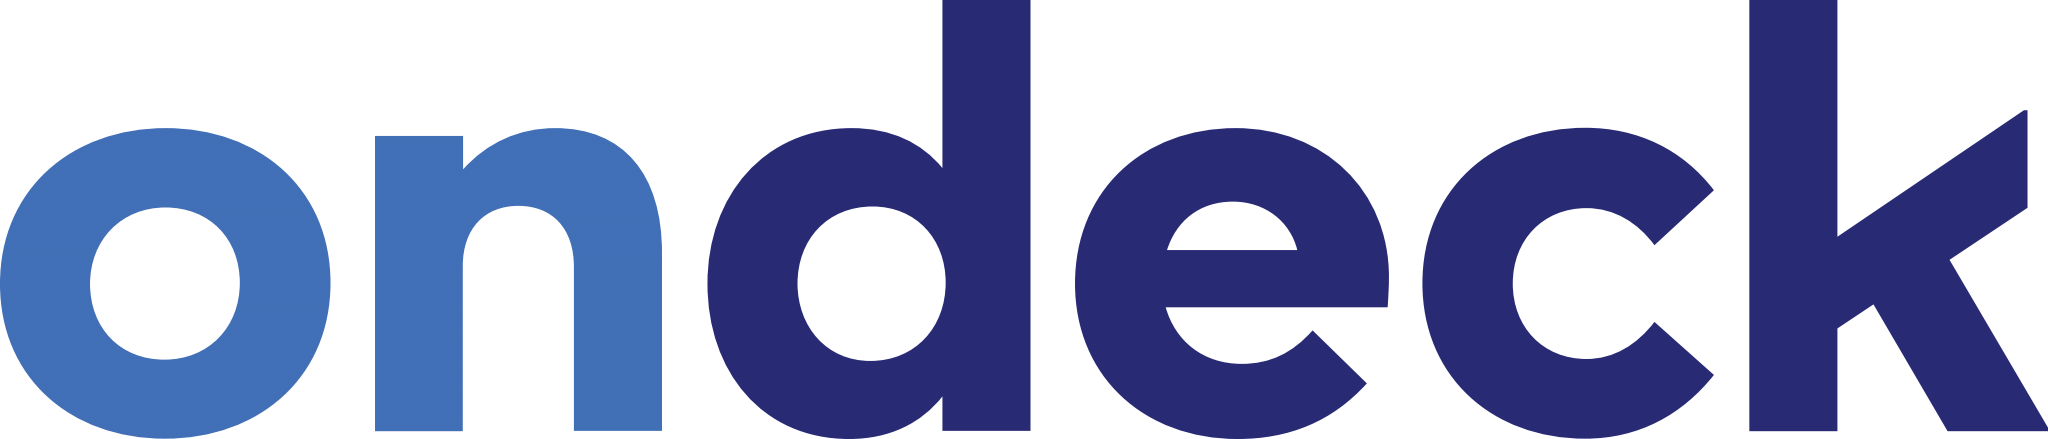 OD logo color